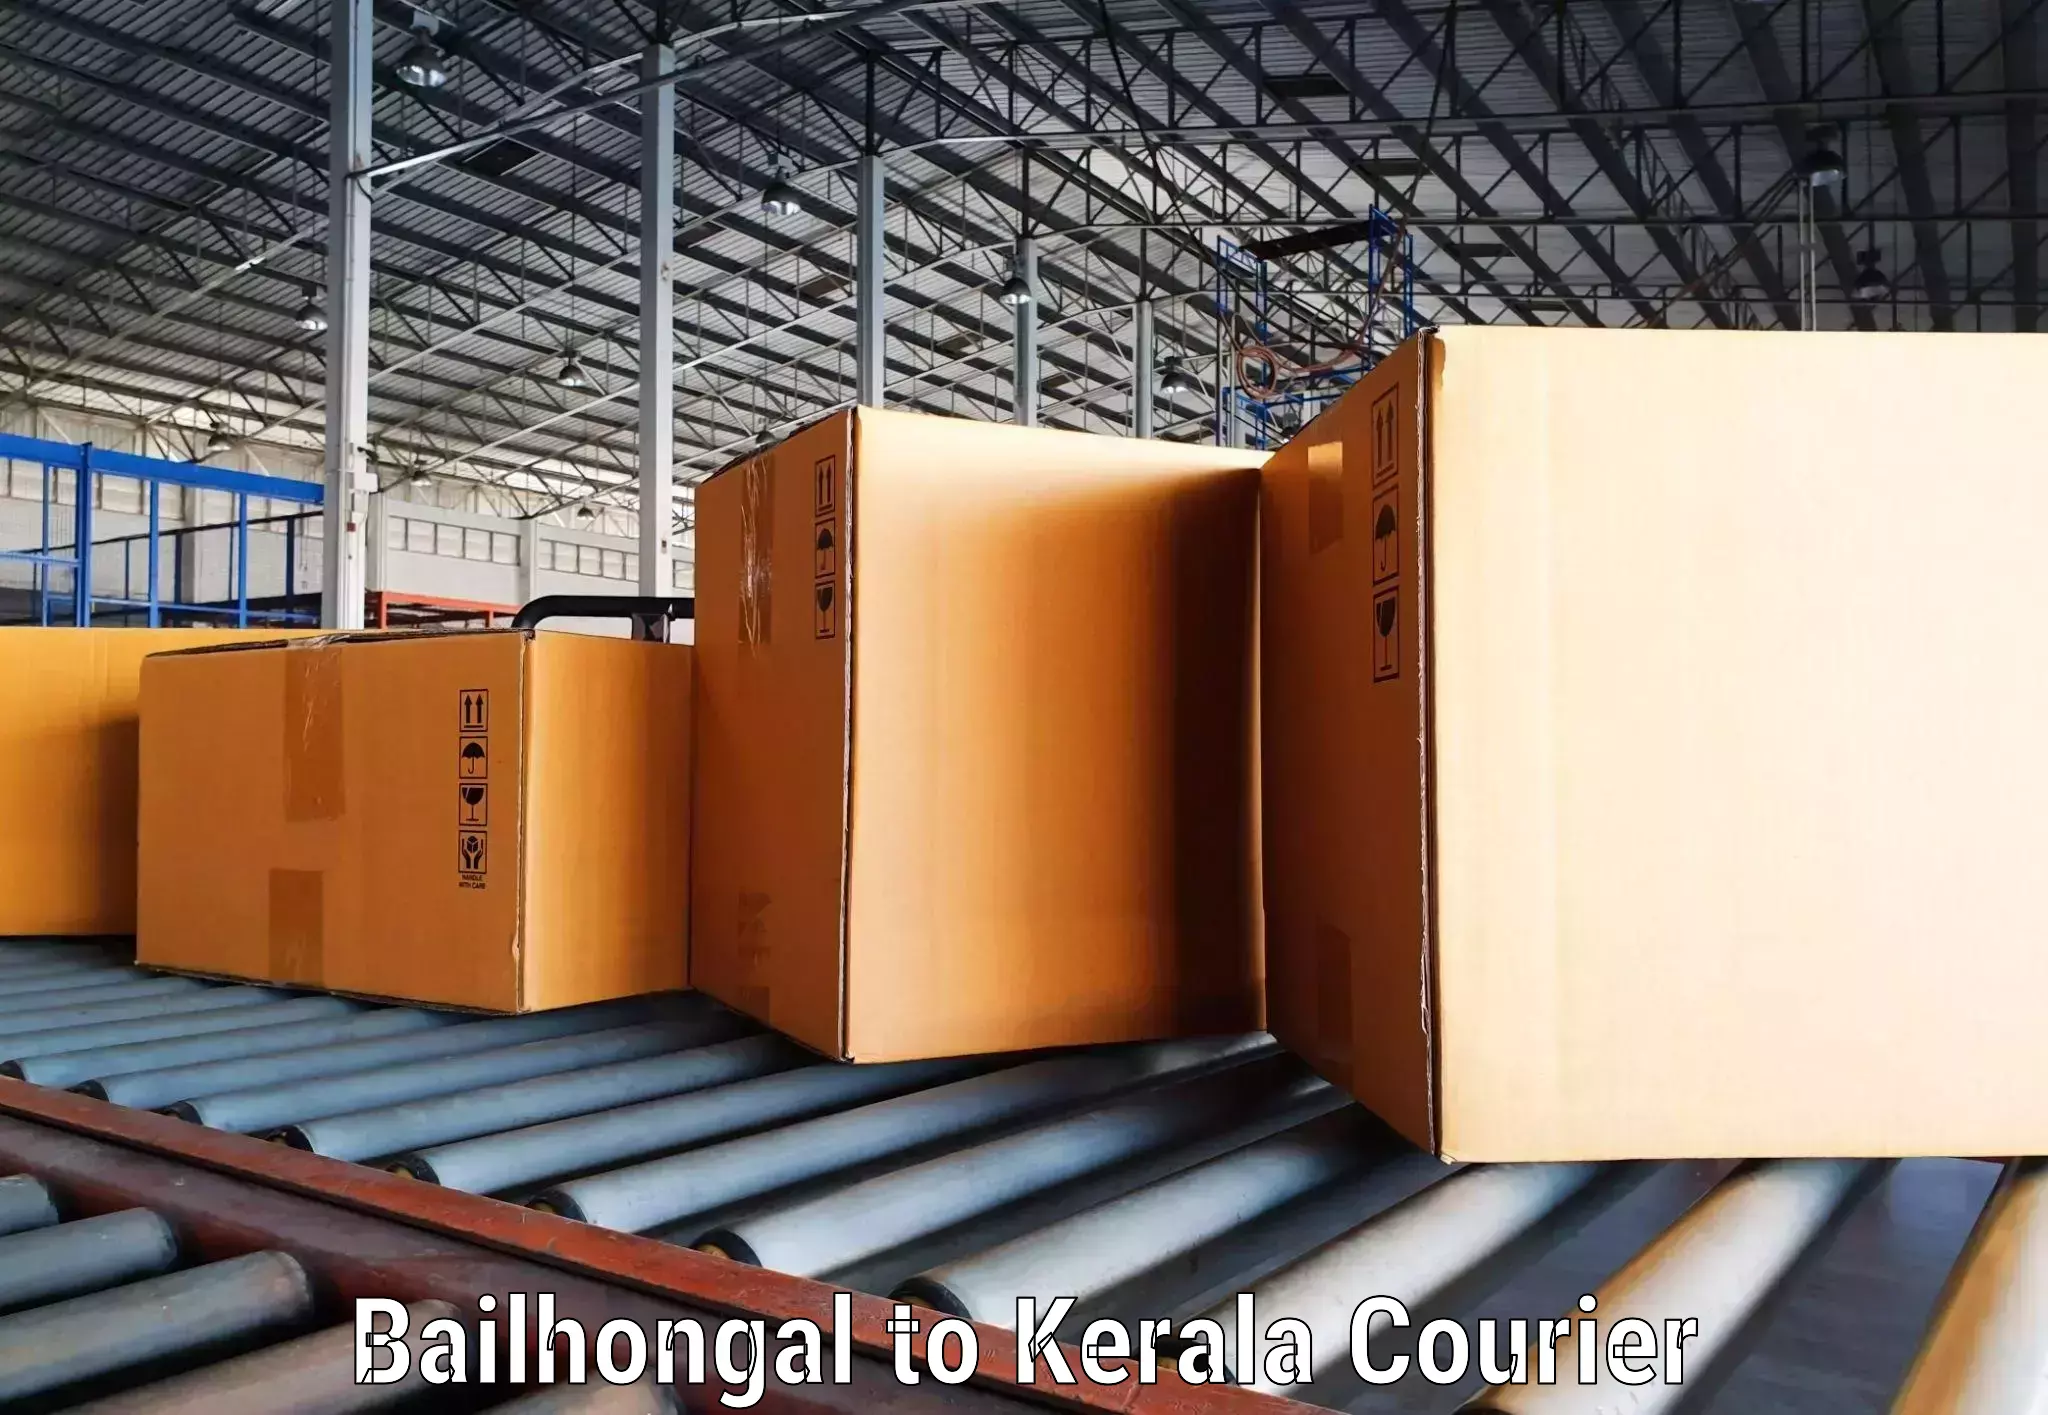 Courier service comparison Bailhongal to Thiruvananthapuram